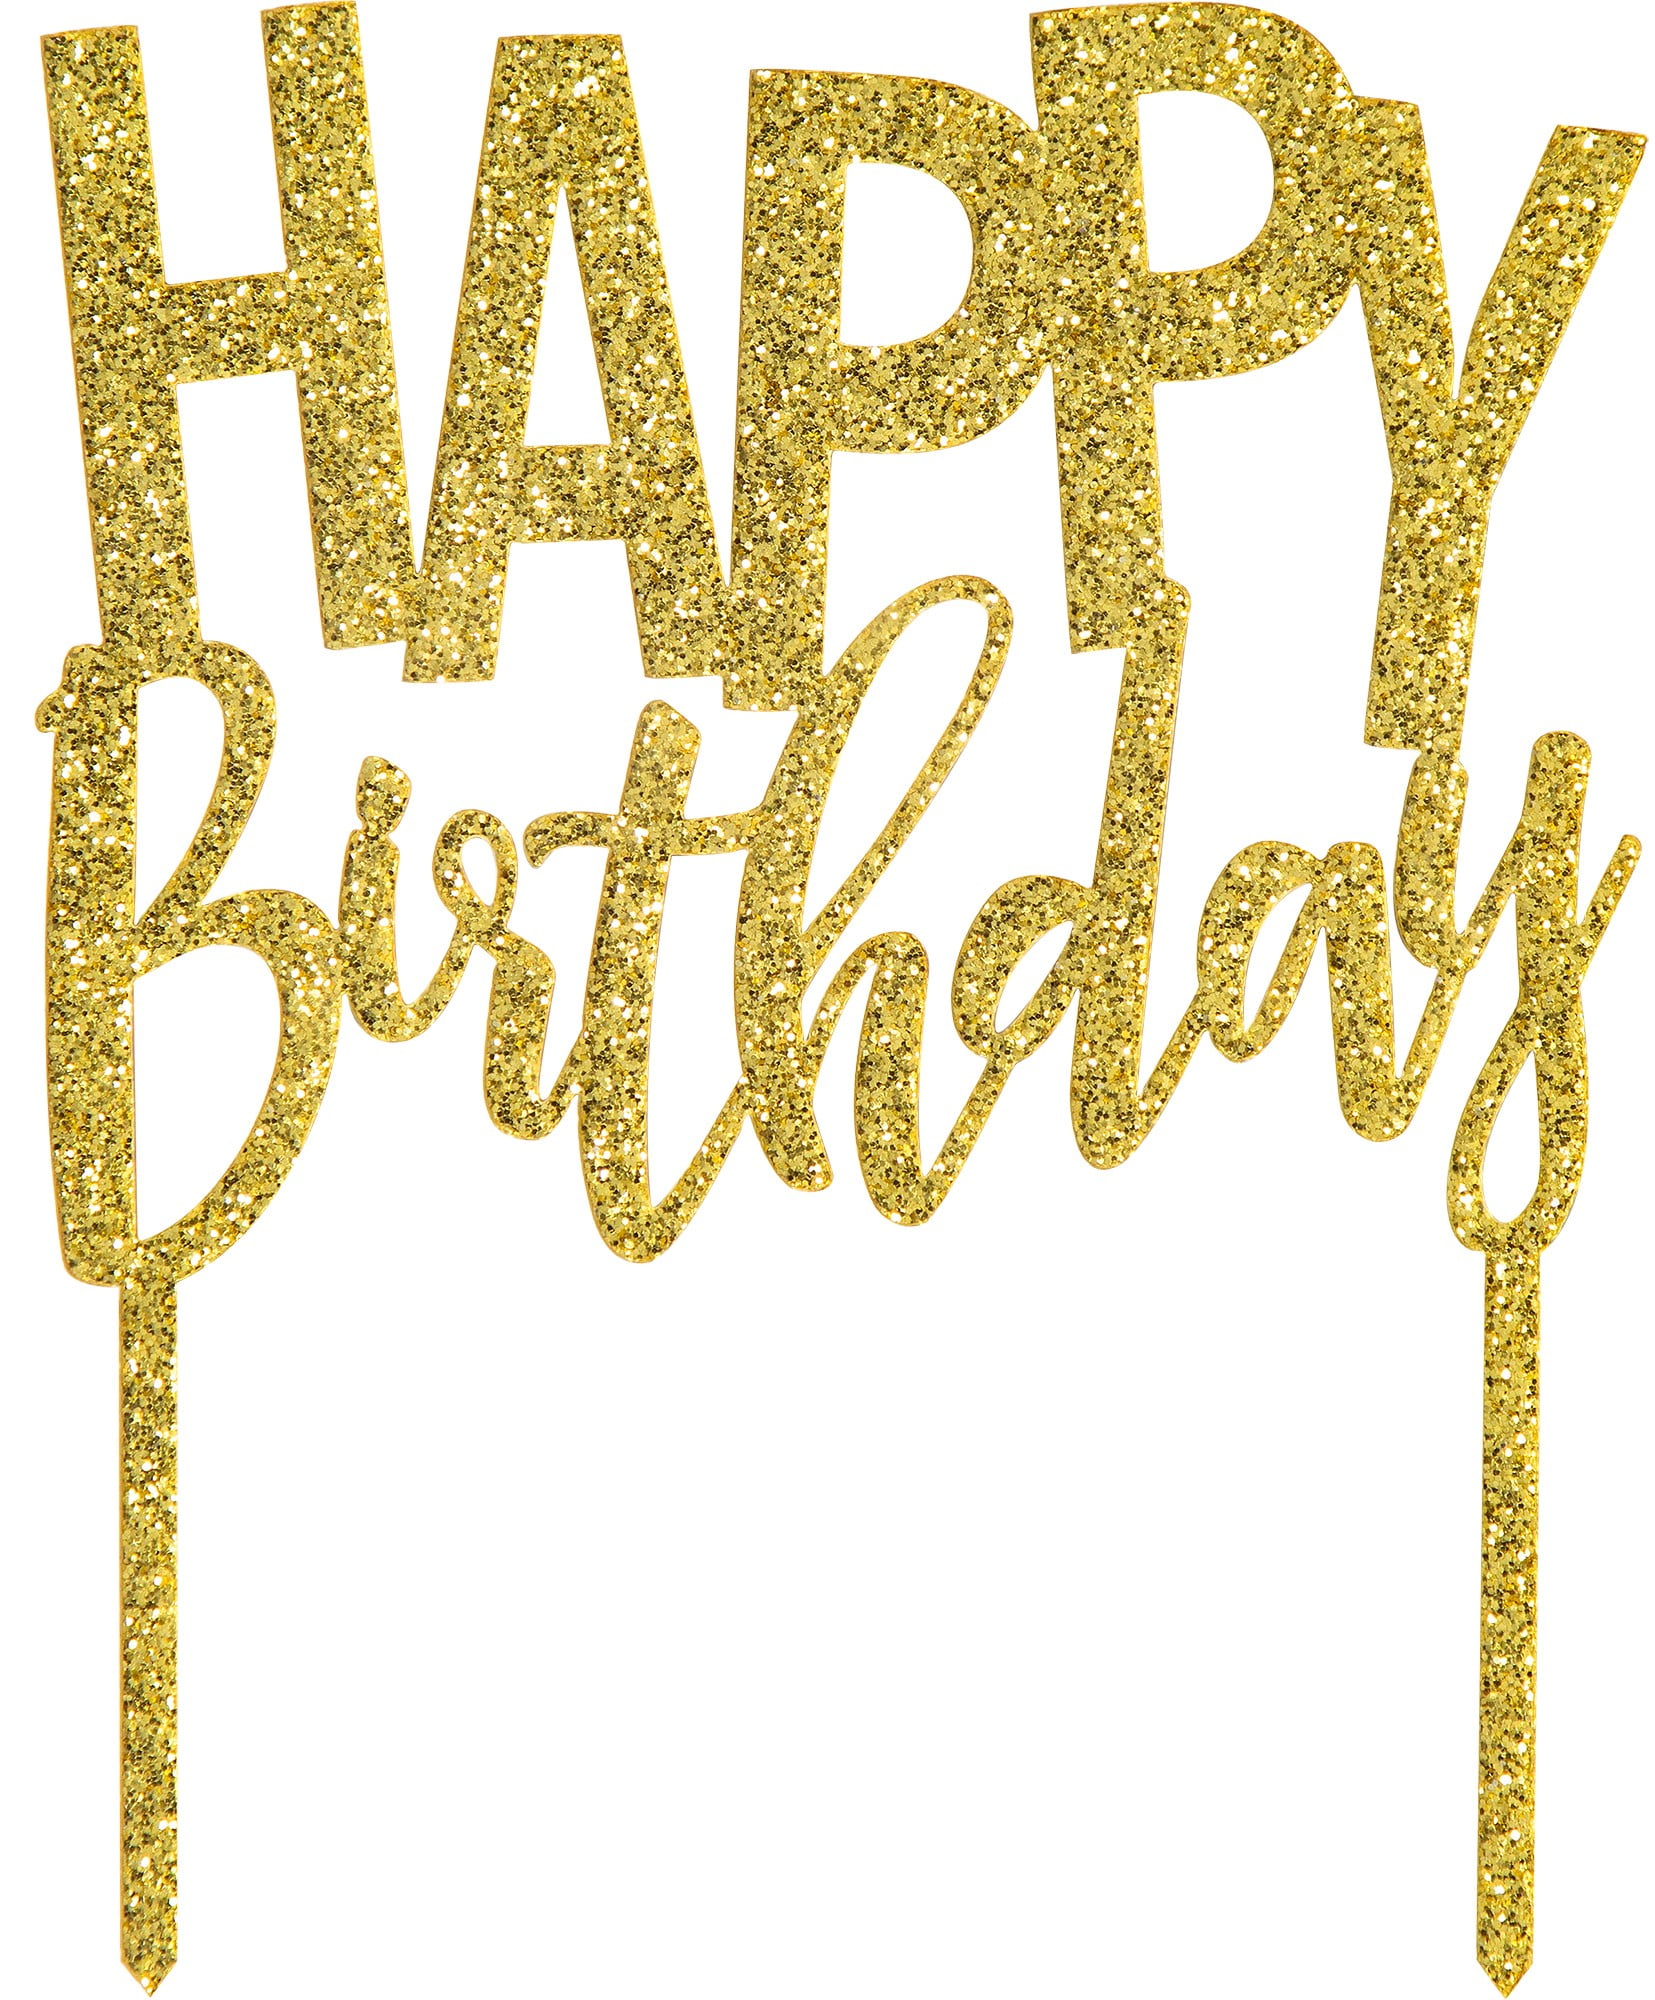 Way to Celebrate Gold Glitter Happy Birthday Cake Topper, 4.5" x 5.5", 1 Ct